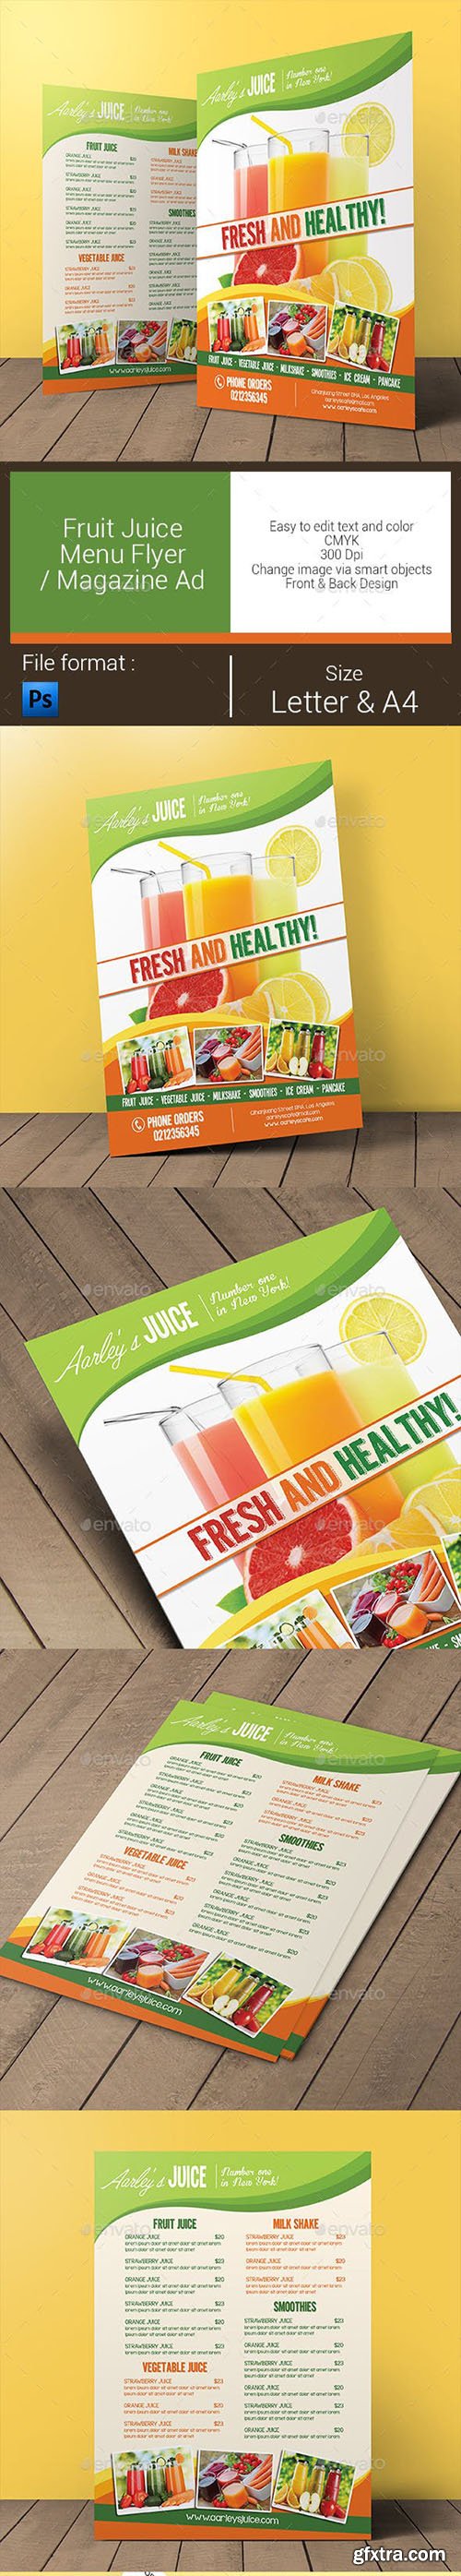 Fruit Juice Menu Flyer / Magazine Ad 11027875